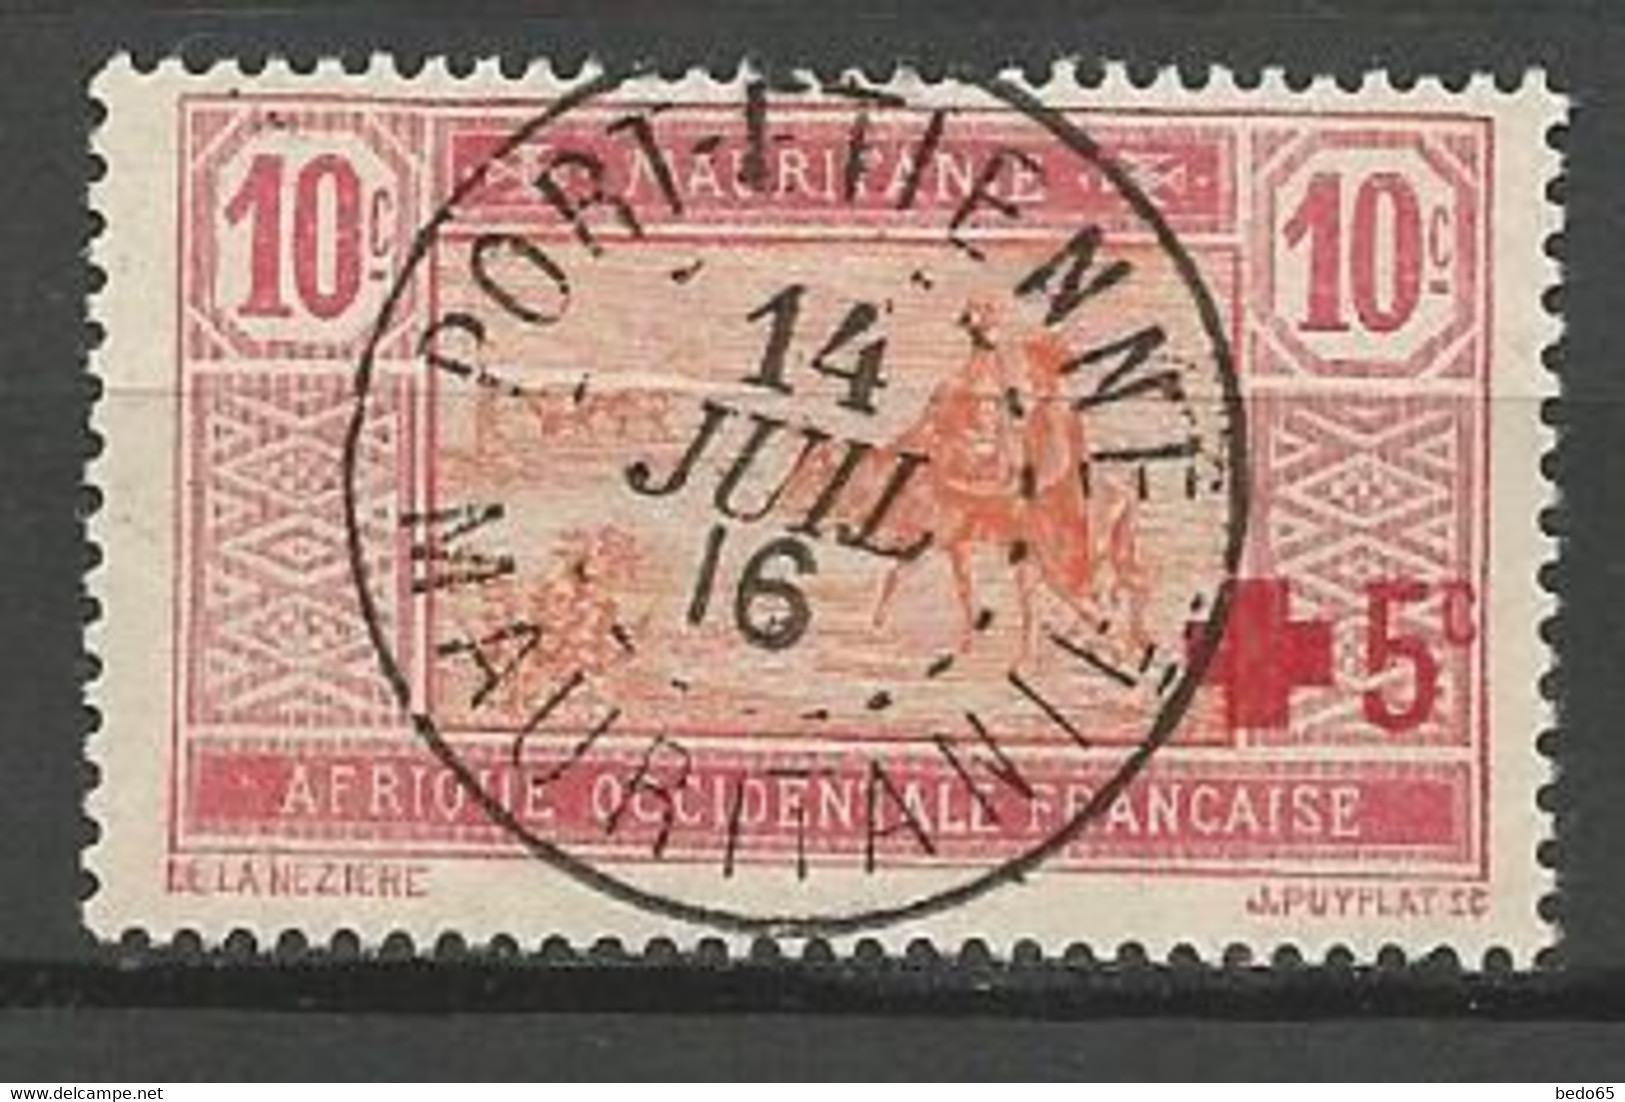 MAURITANIE N° 34 CACHET PORT-ETIENNE - Used Stamps